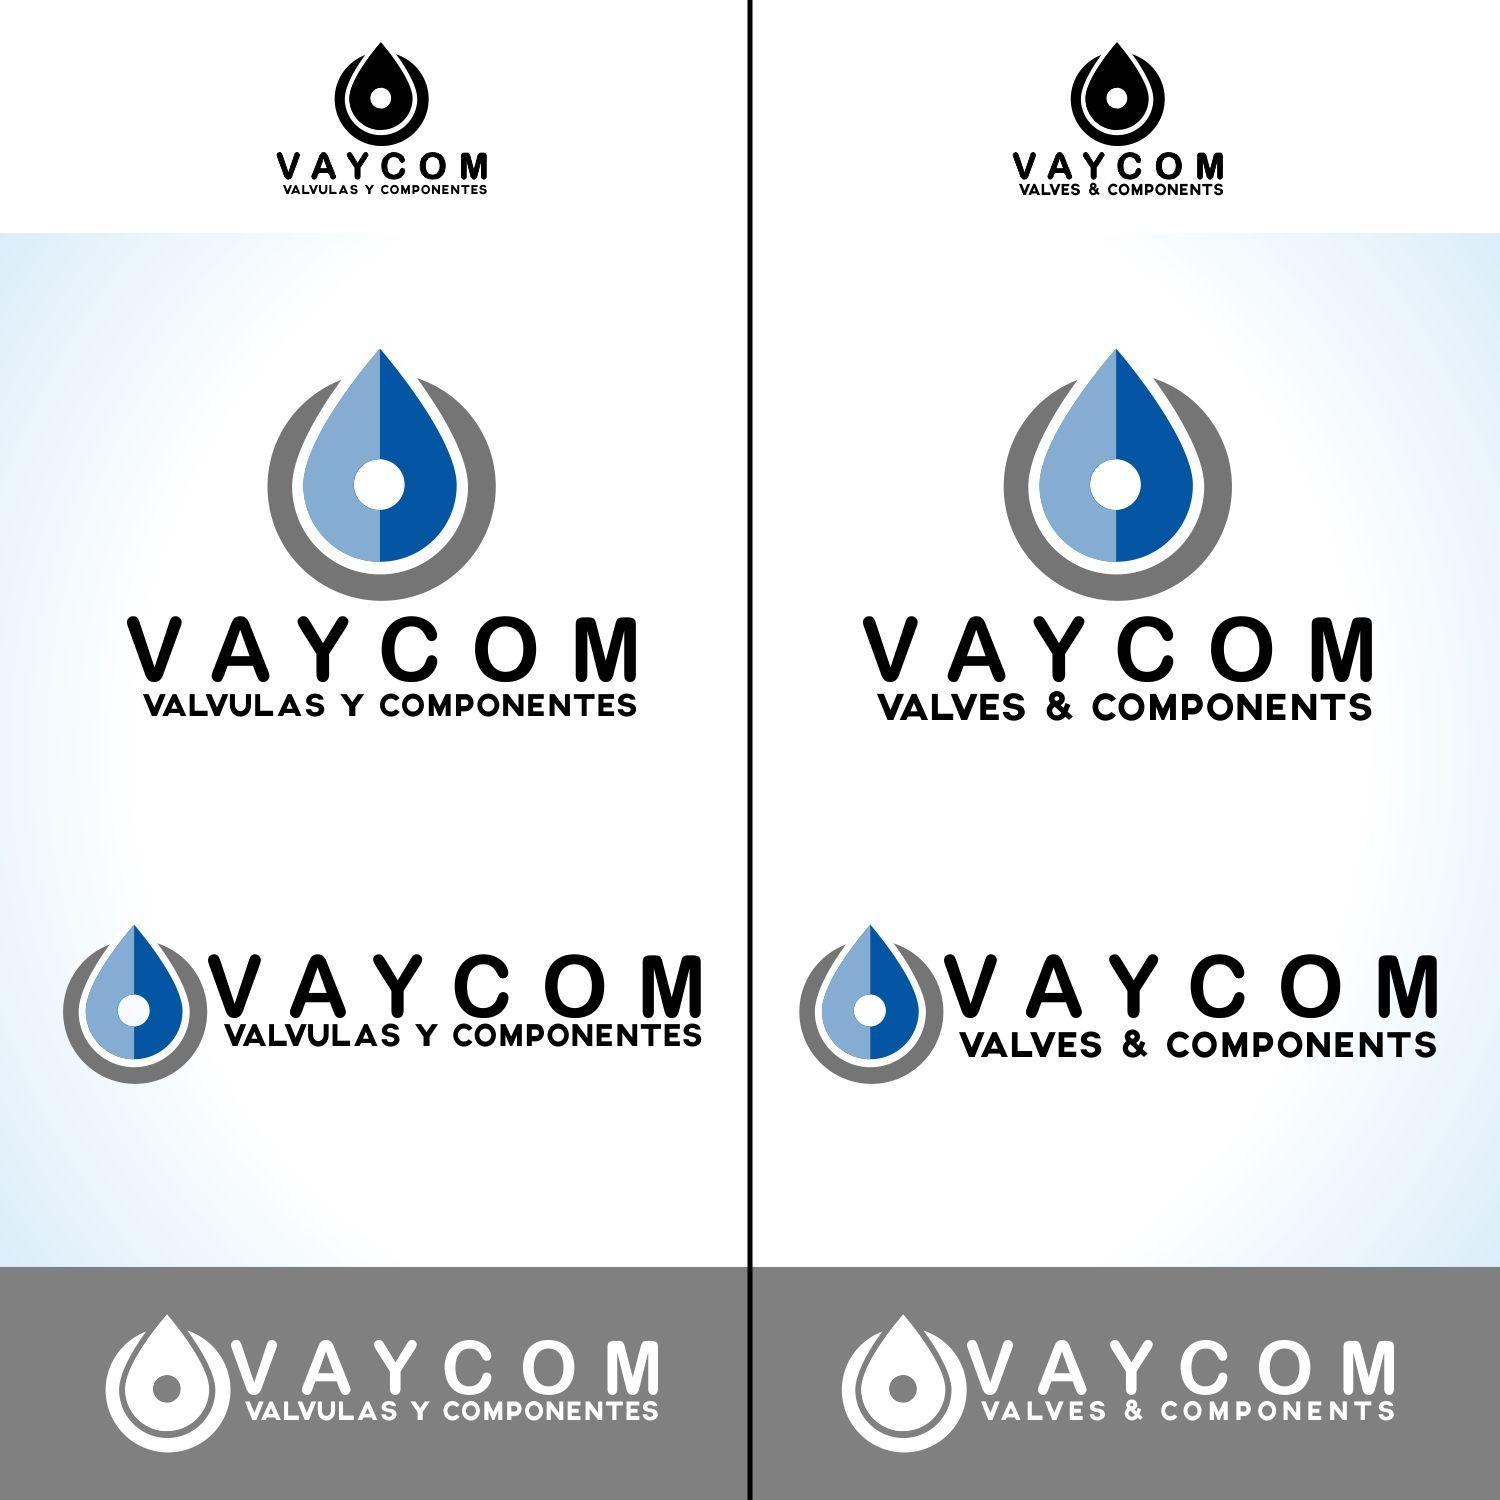 Spanish Company Logo - Serious, Modern, It Company Logo Design for VAYCOM Y